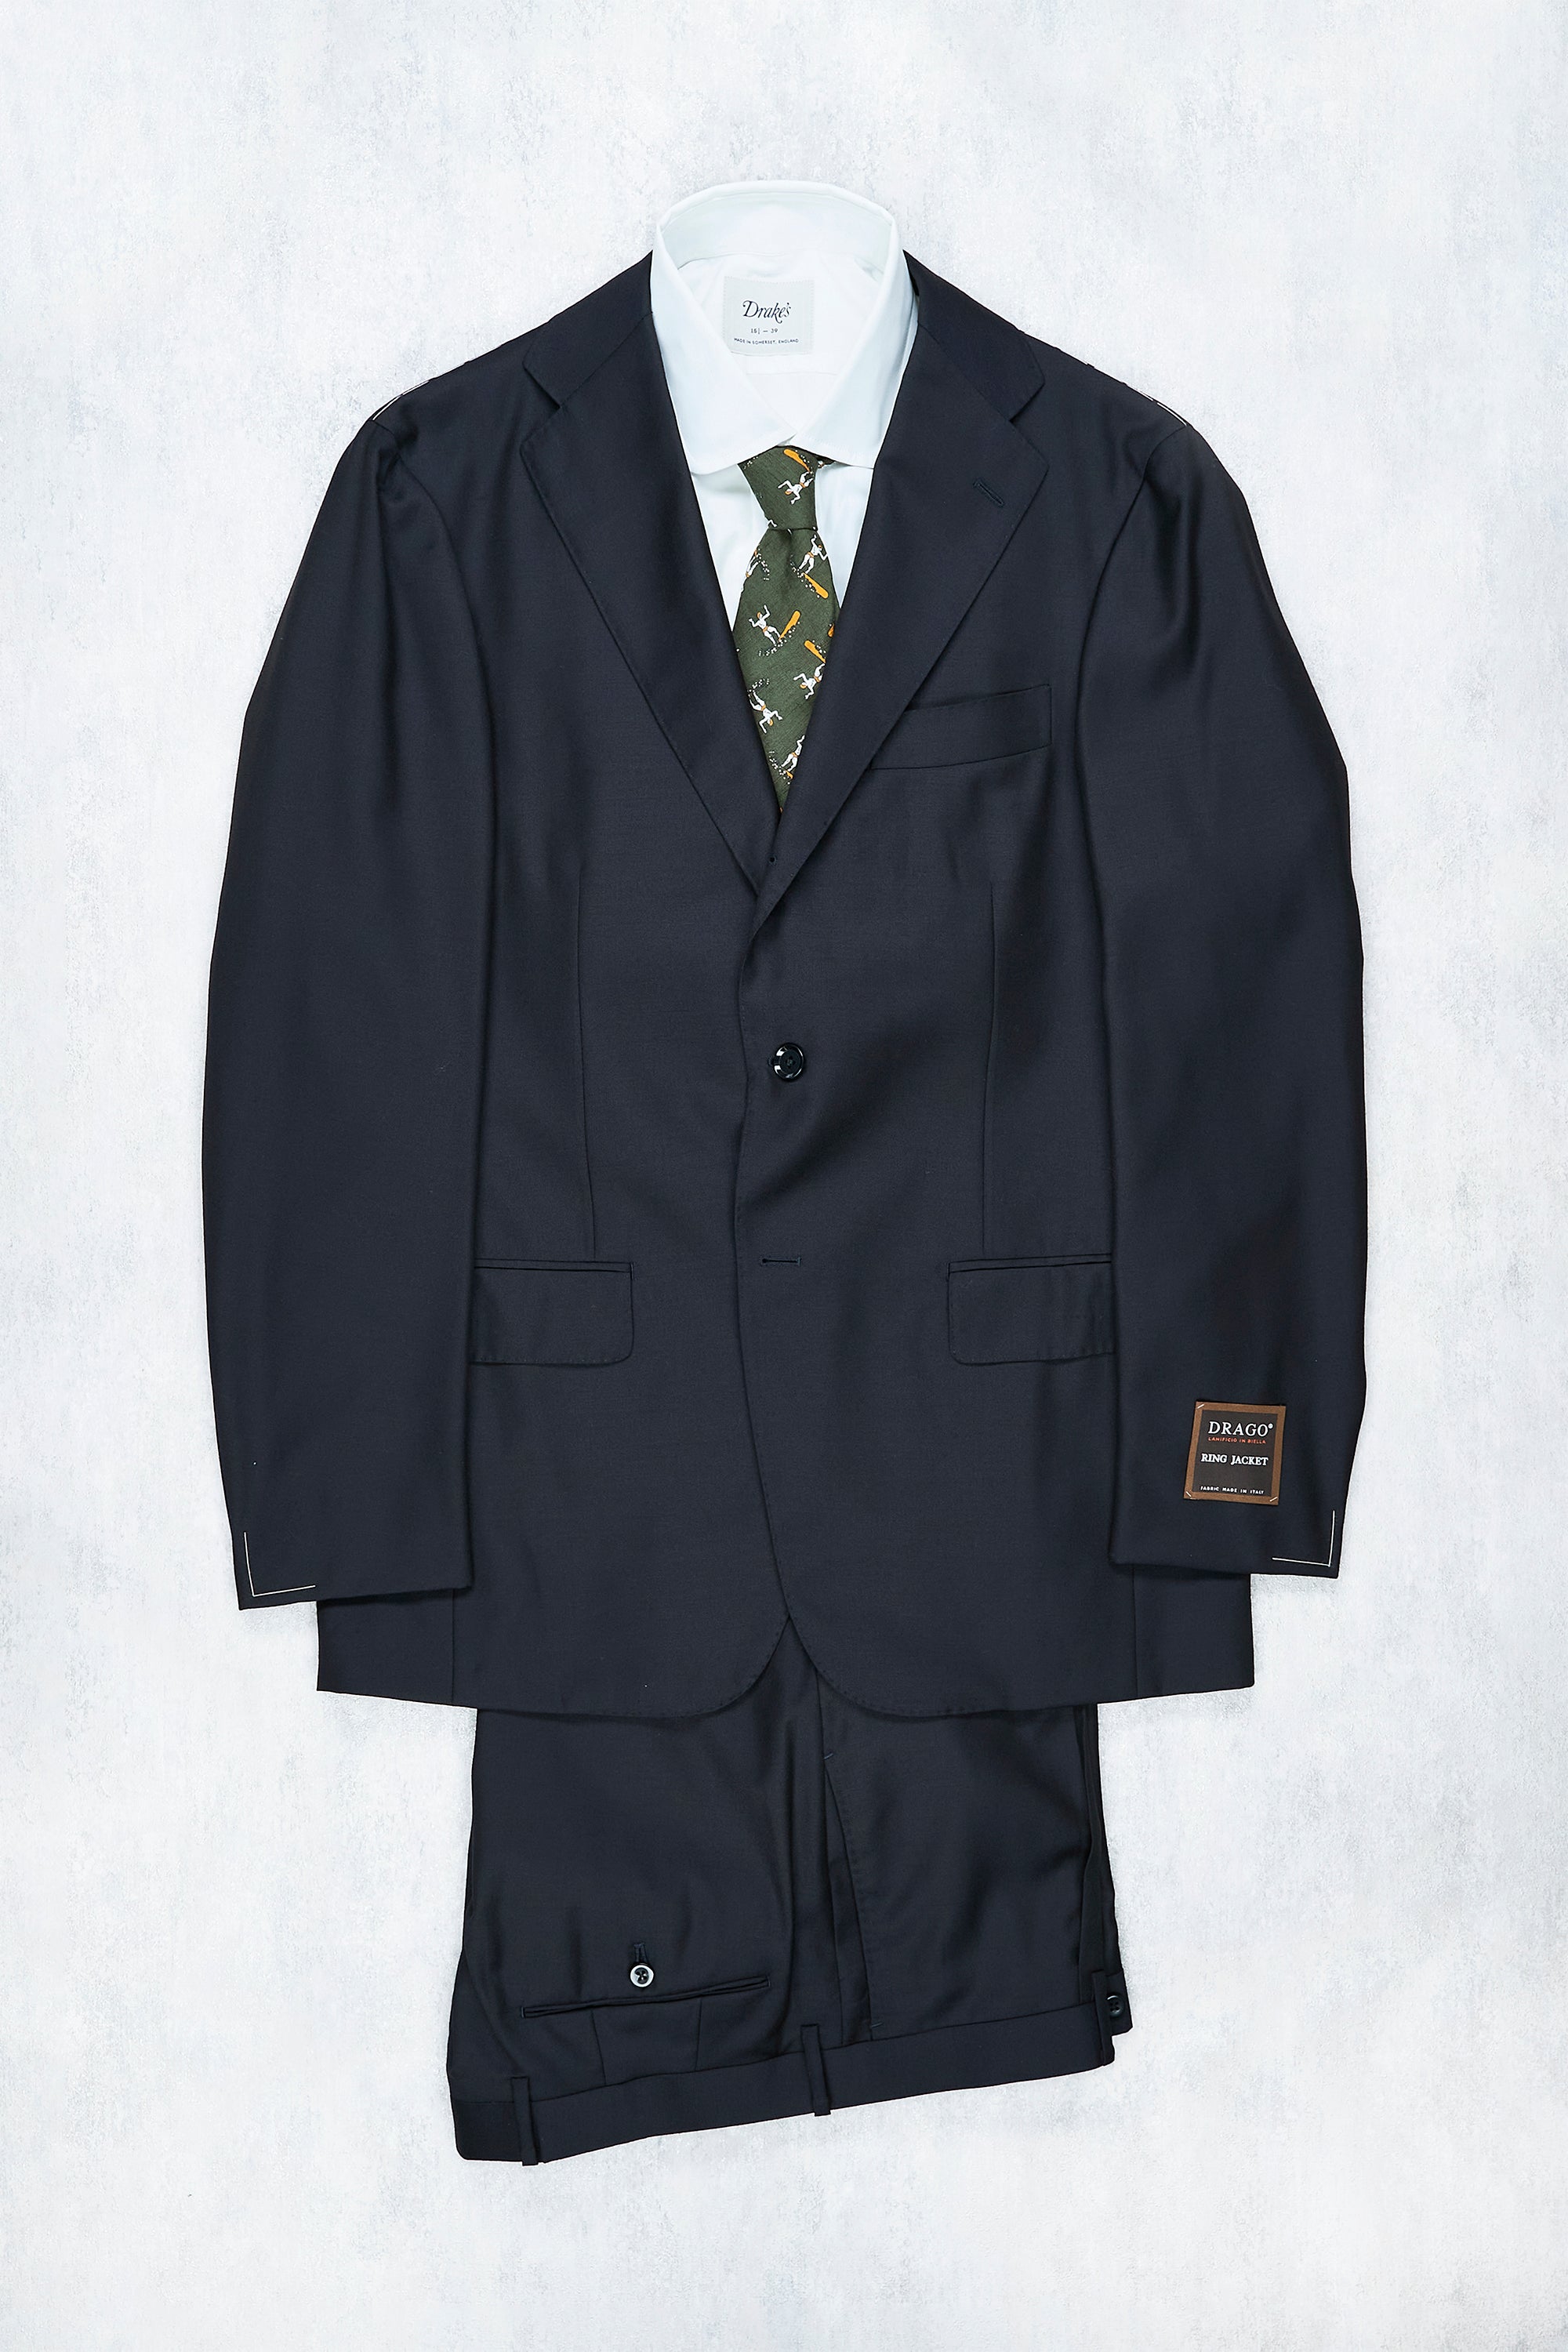 Ring Jacket 184 Dark Navy Twill Wool Suit